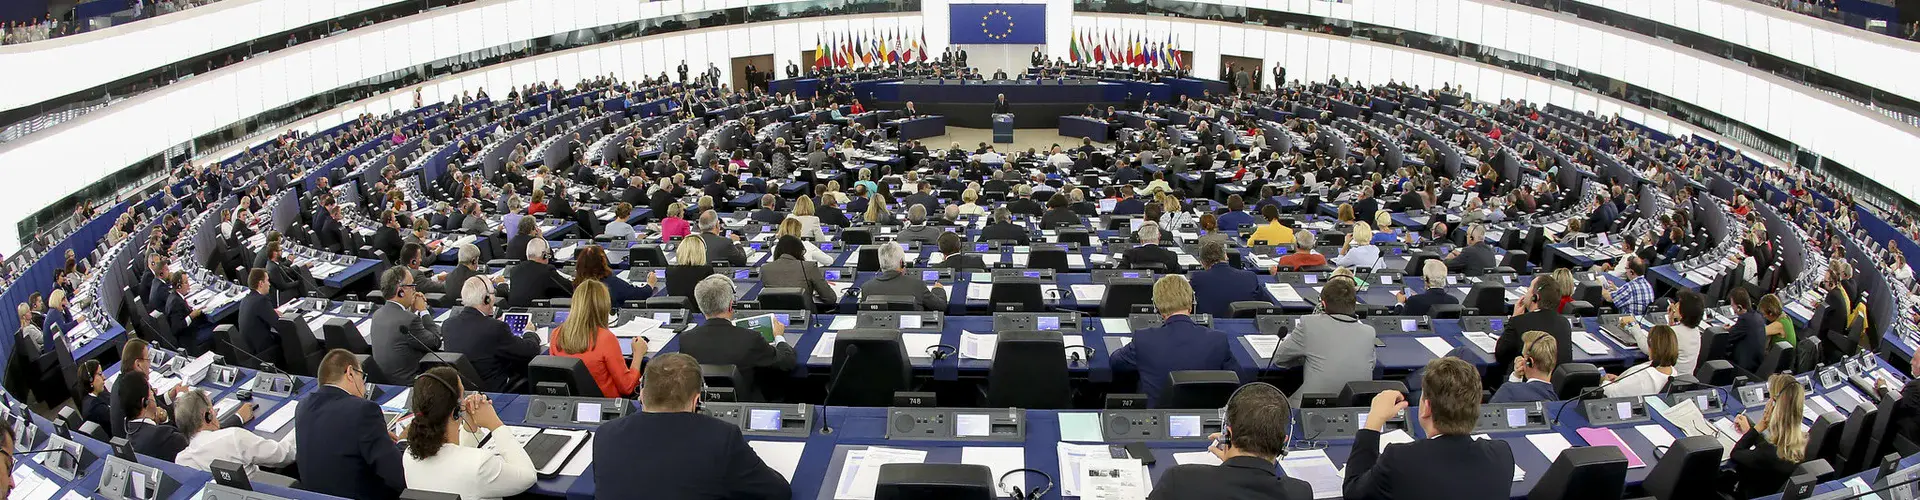 State of the Union (Credit: European Union 2015 - European Parliament via Flickr)